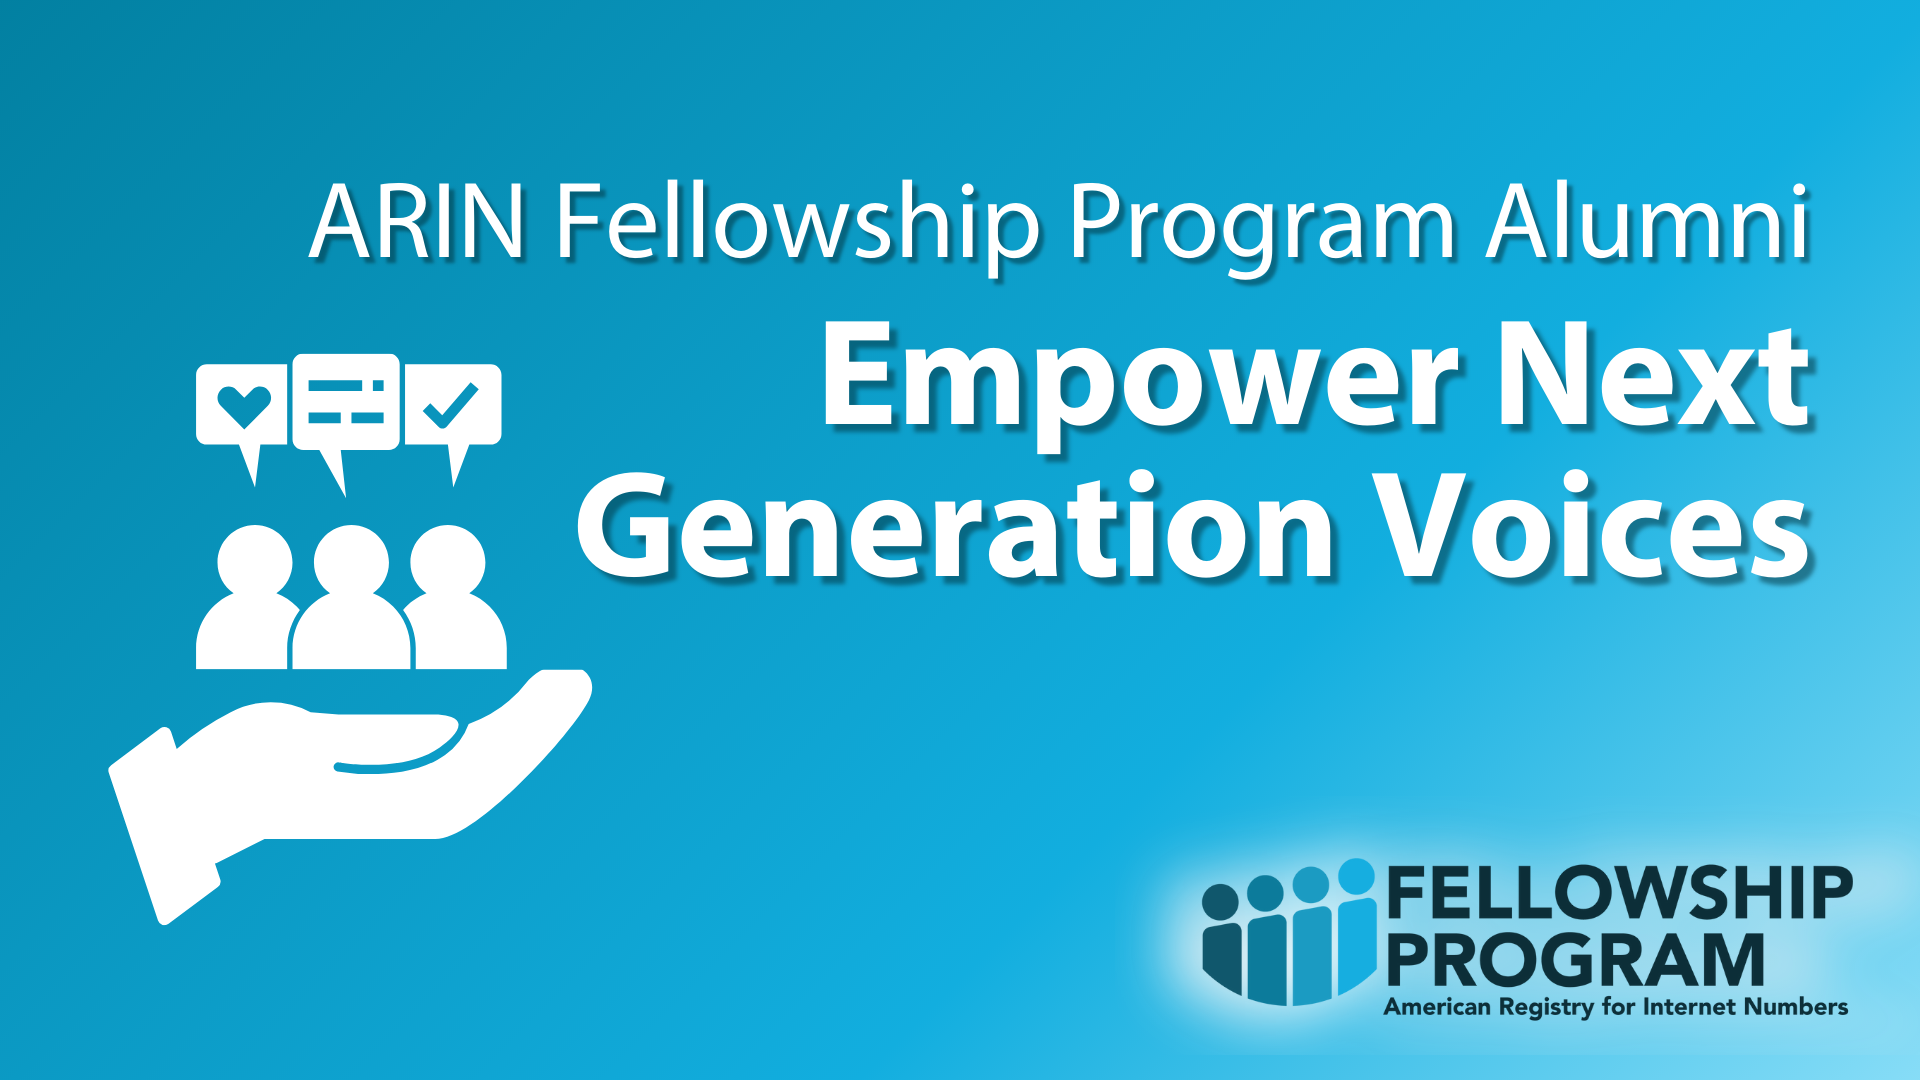 ARIN Fellowship Program Alumni Empower Next Generation Voices